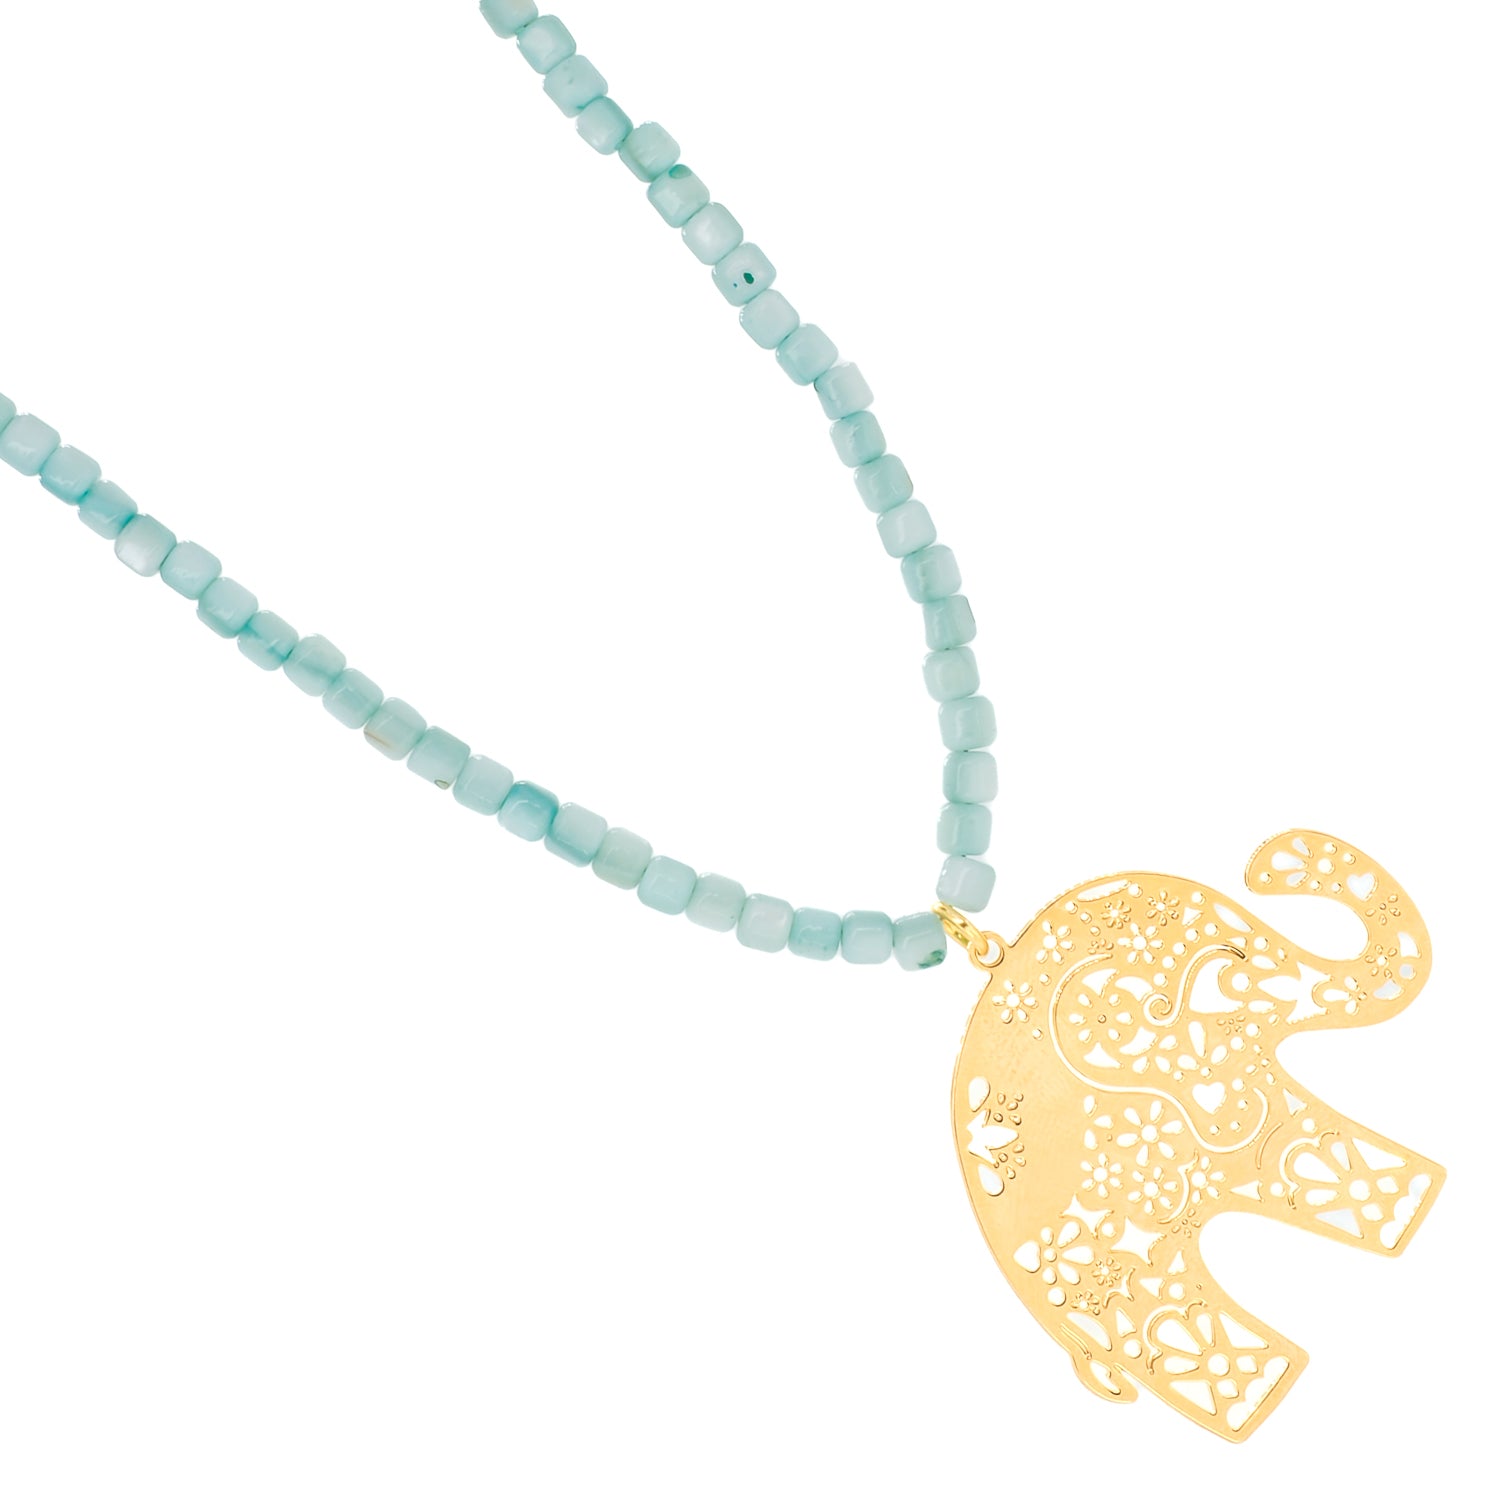 Stylish Bohemian Necklace Featuring Elephant Symbol and Blue Crystal Beads